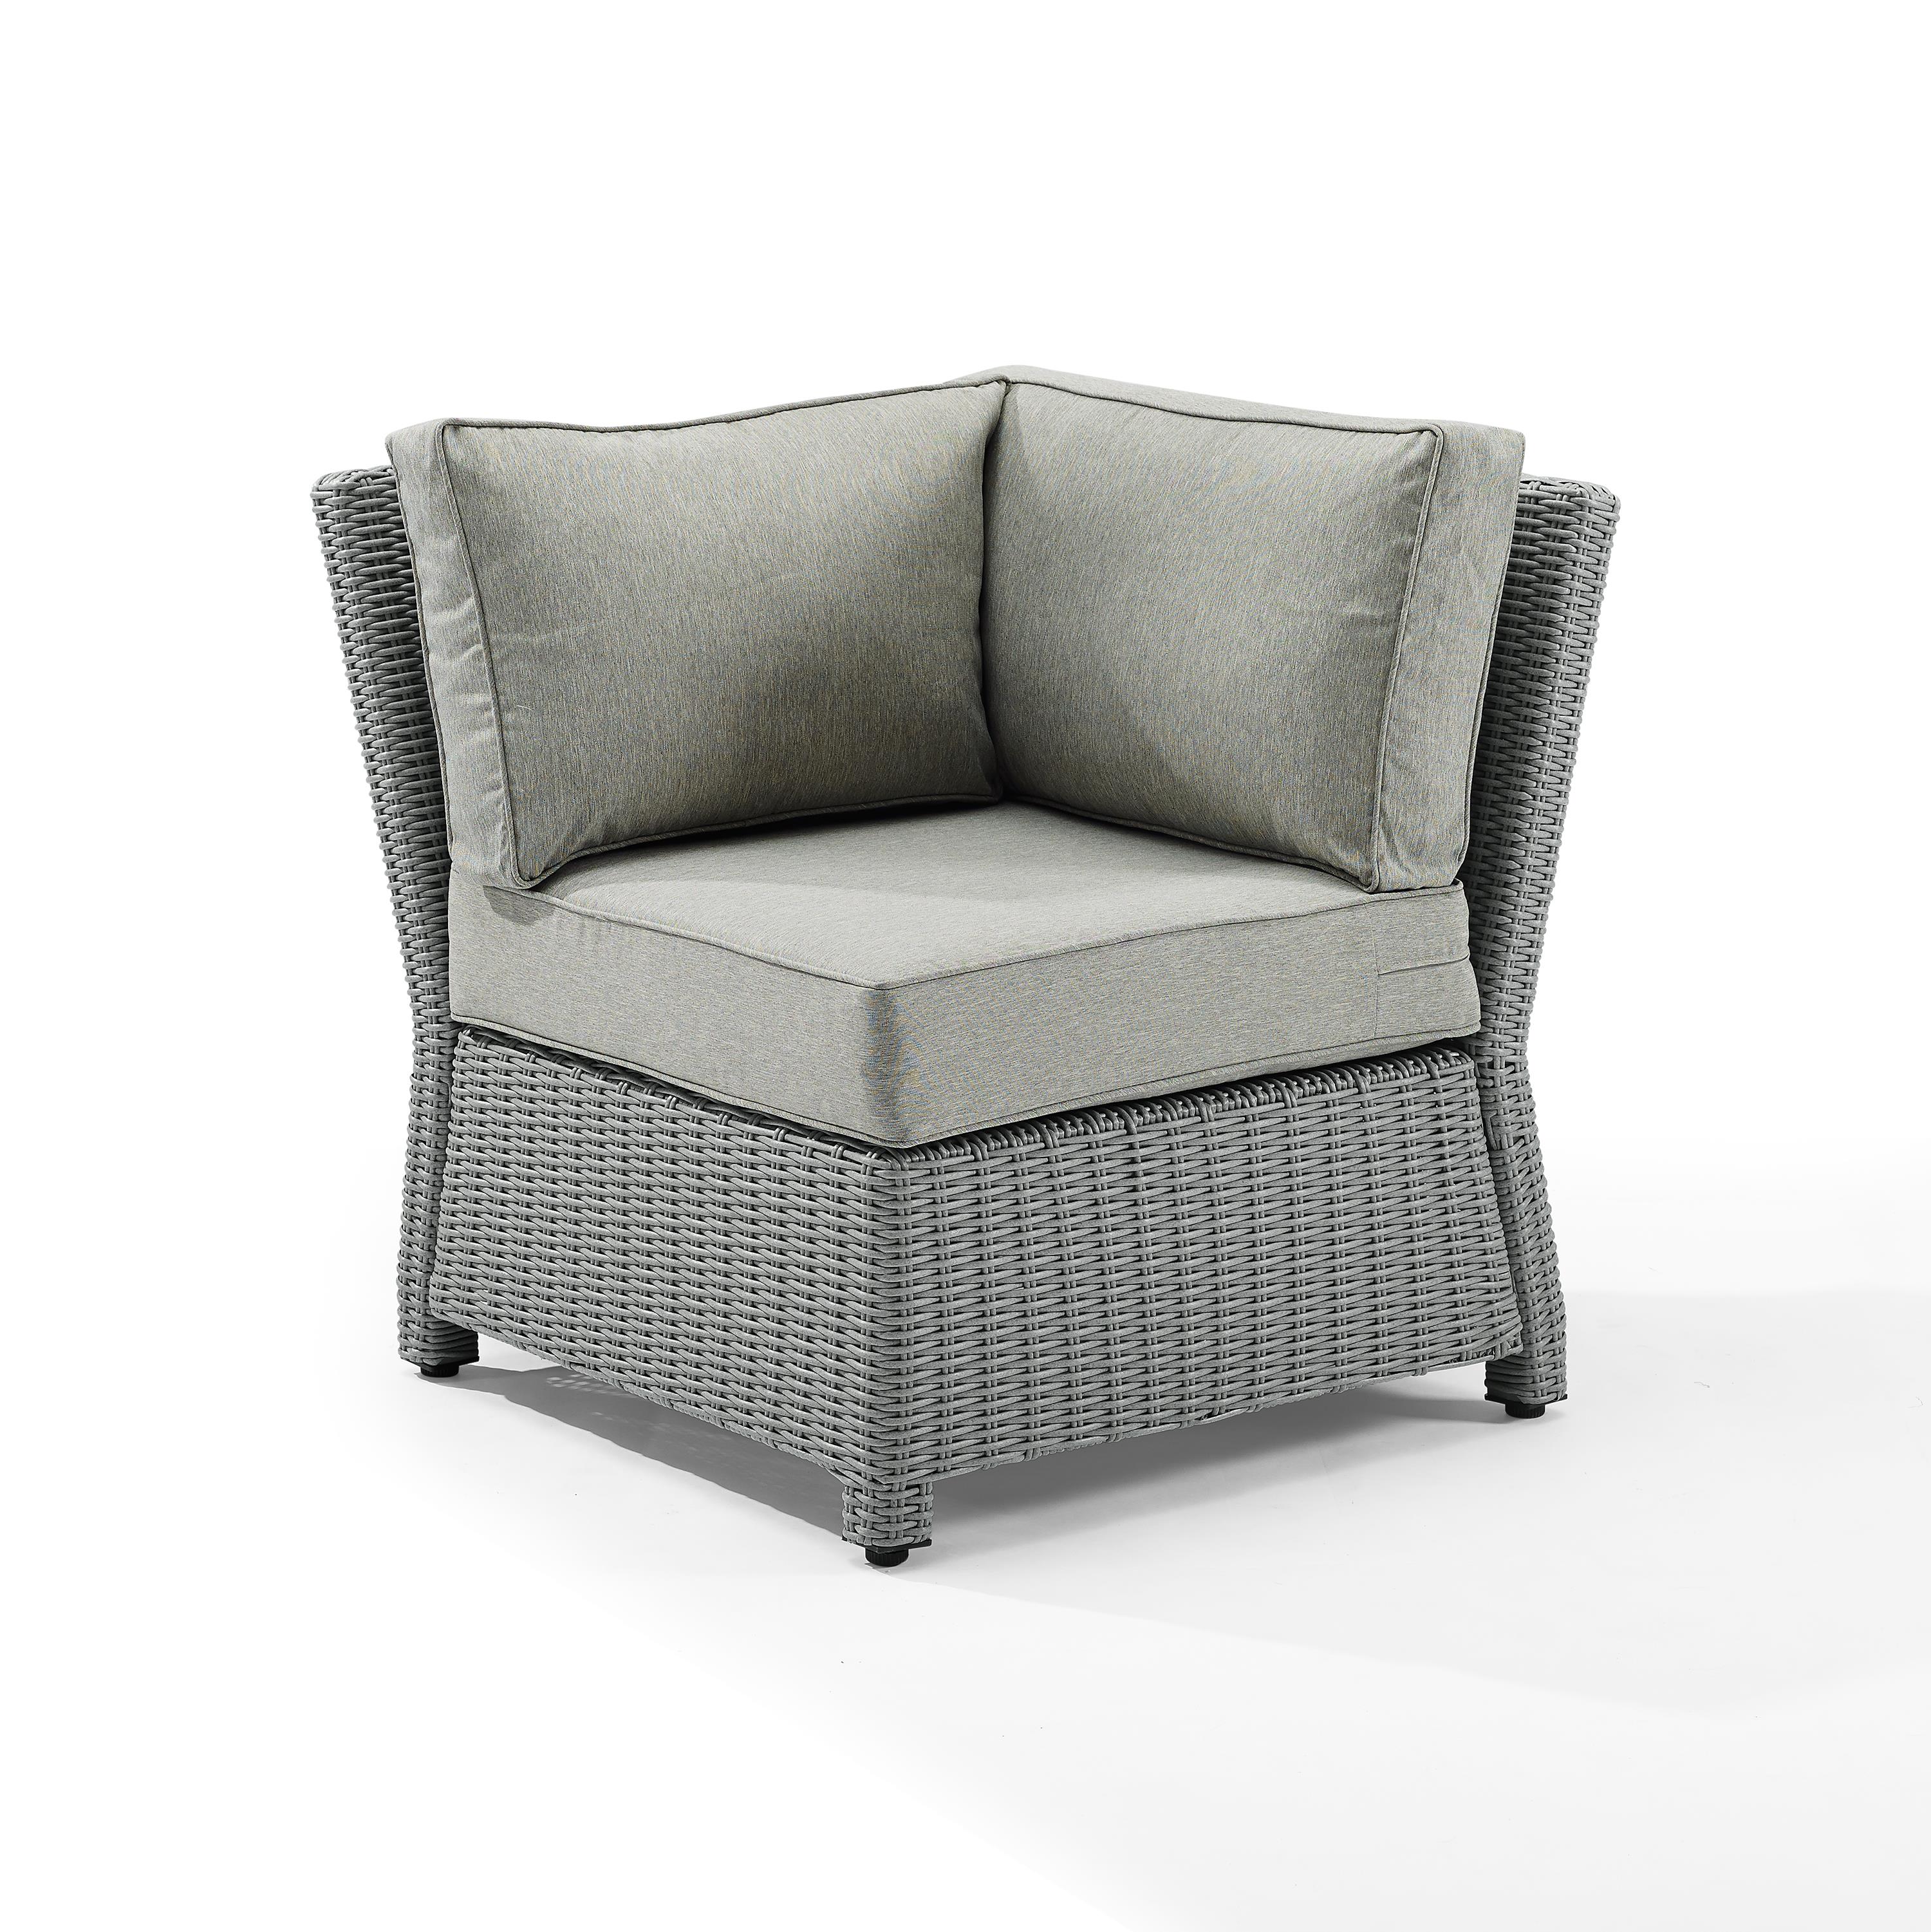 Crosley Bradenton Wicker Patio Corner Chair in Gray - image 2 of 10